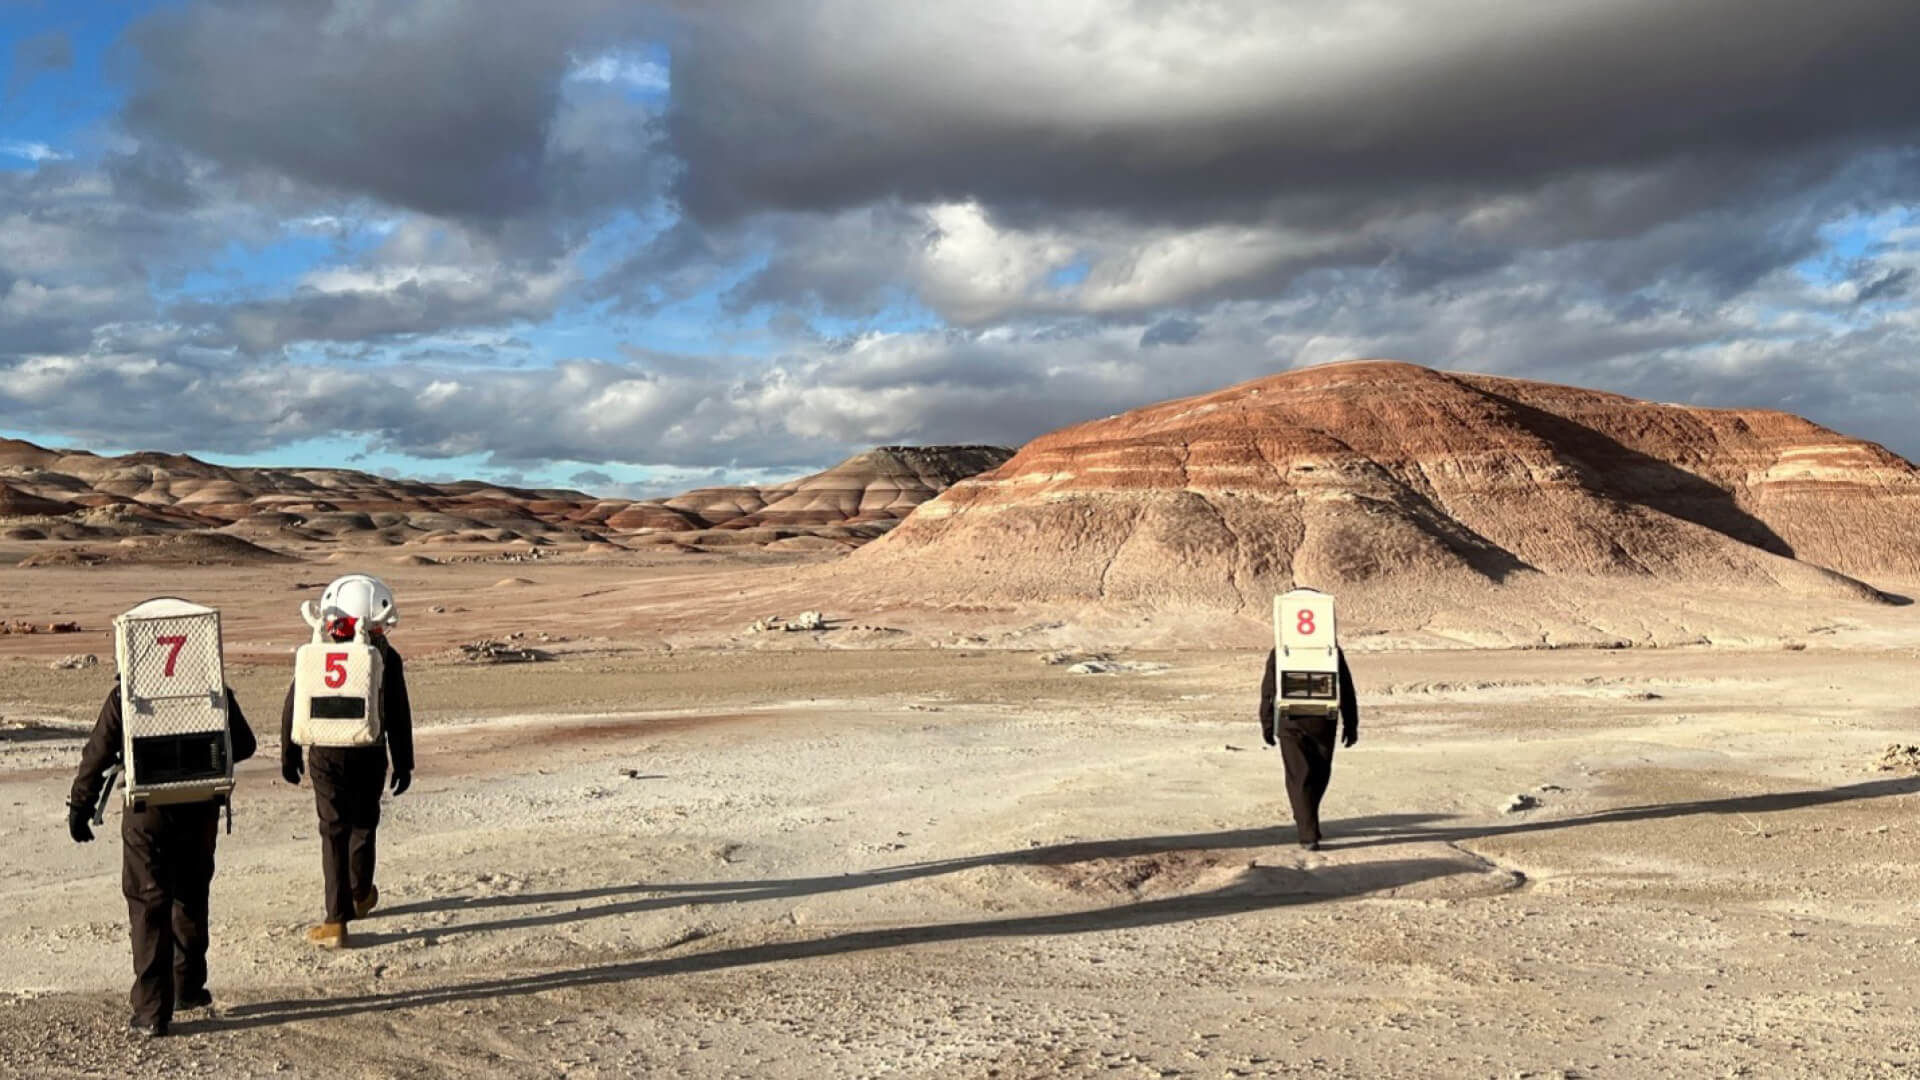 Three Purdue students walk through the barren Utah desert landscape, bearing similarities to Mars.